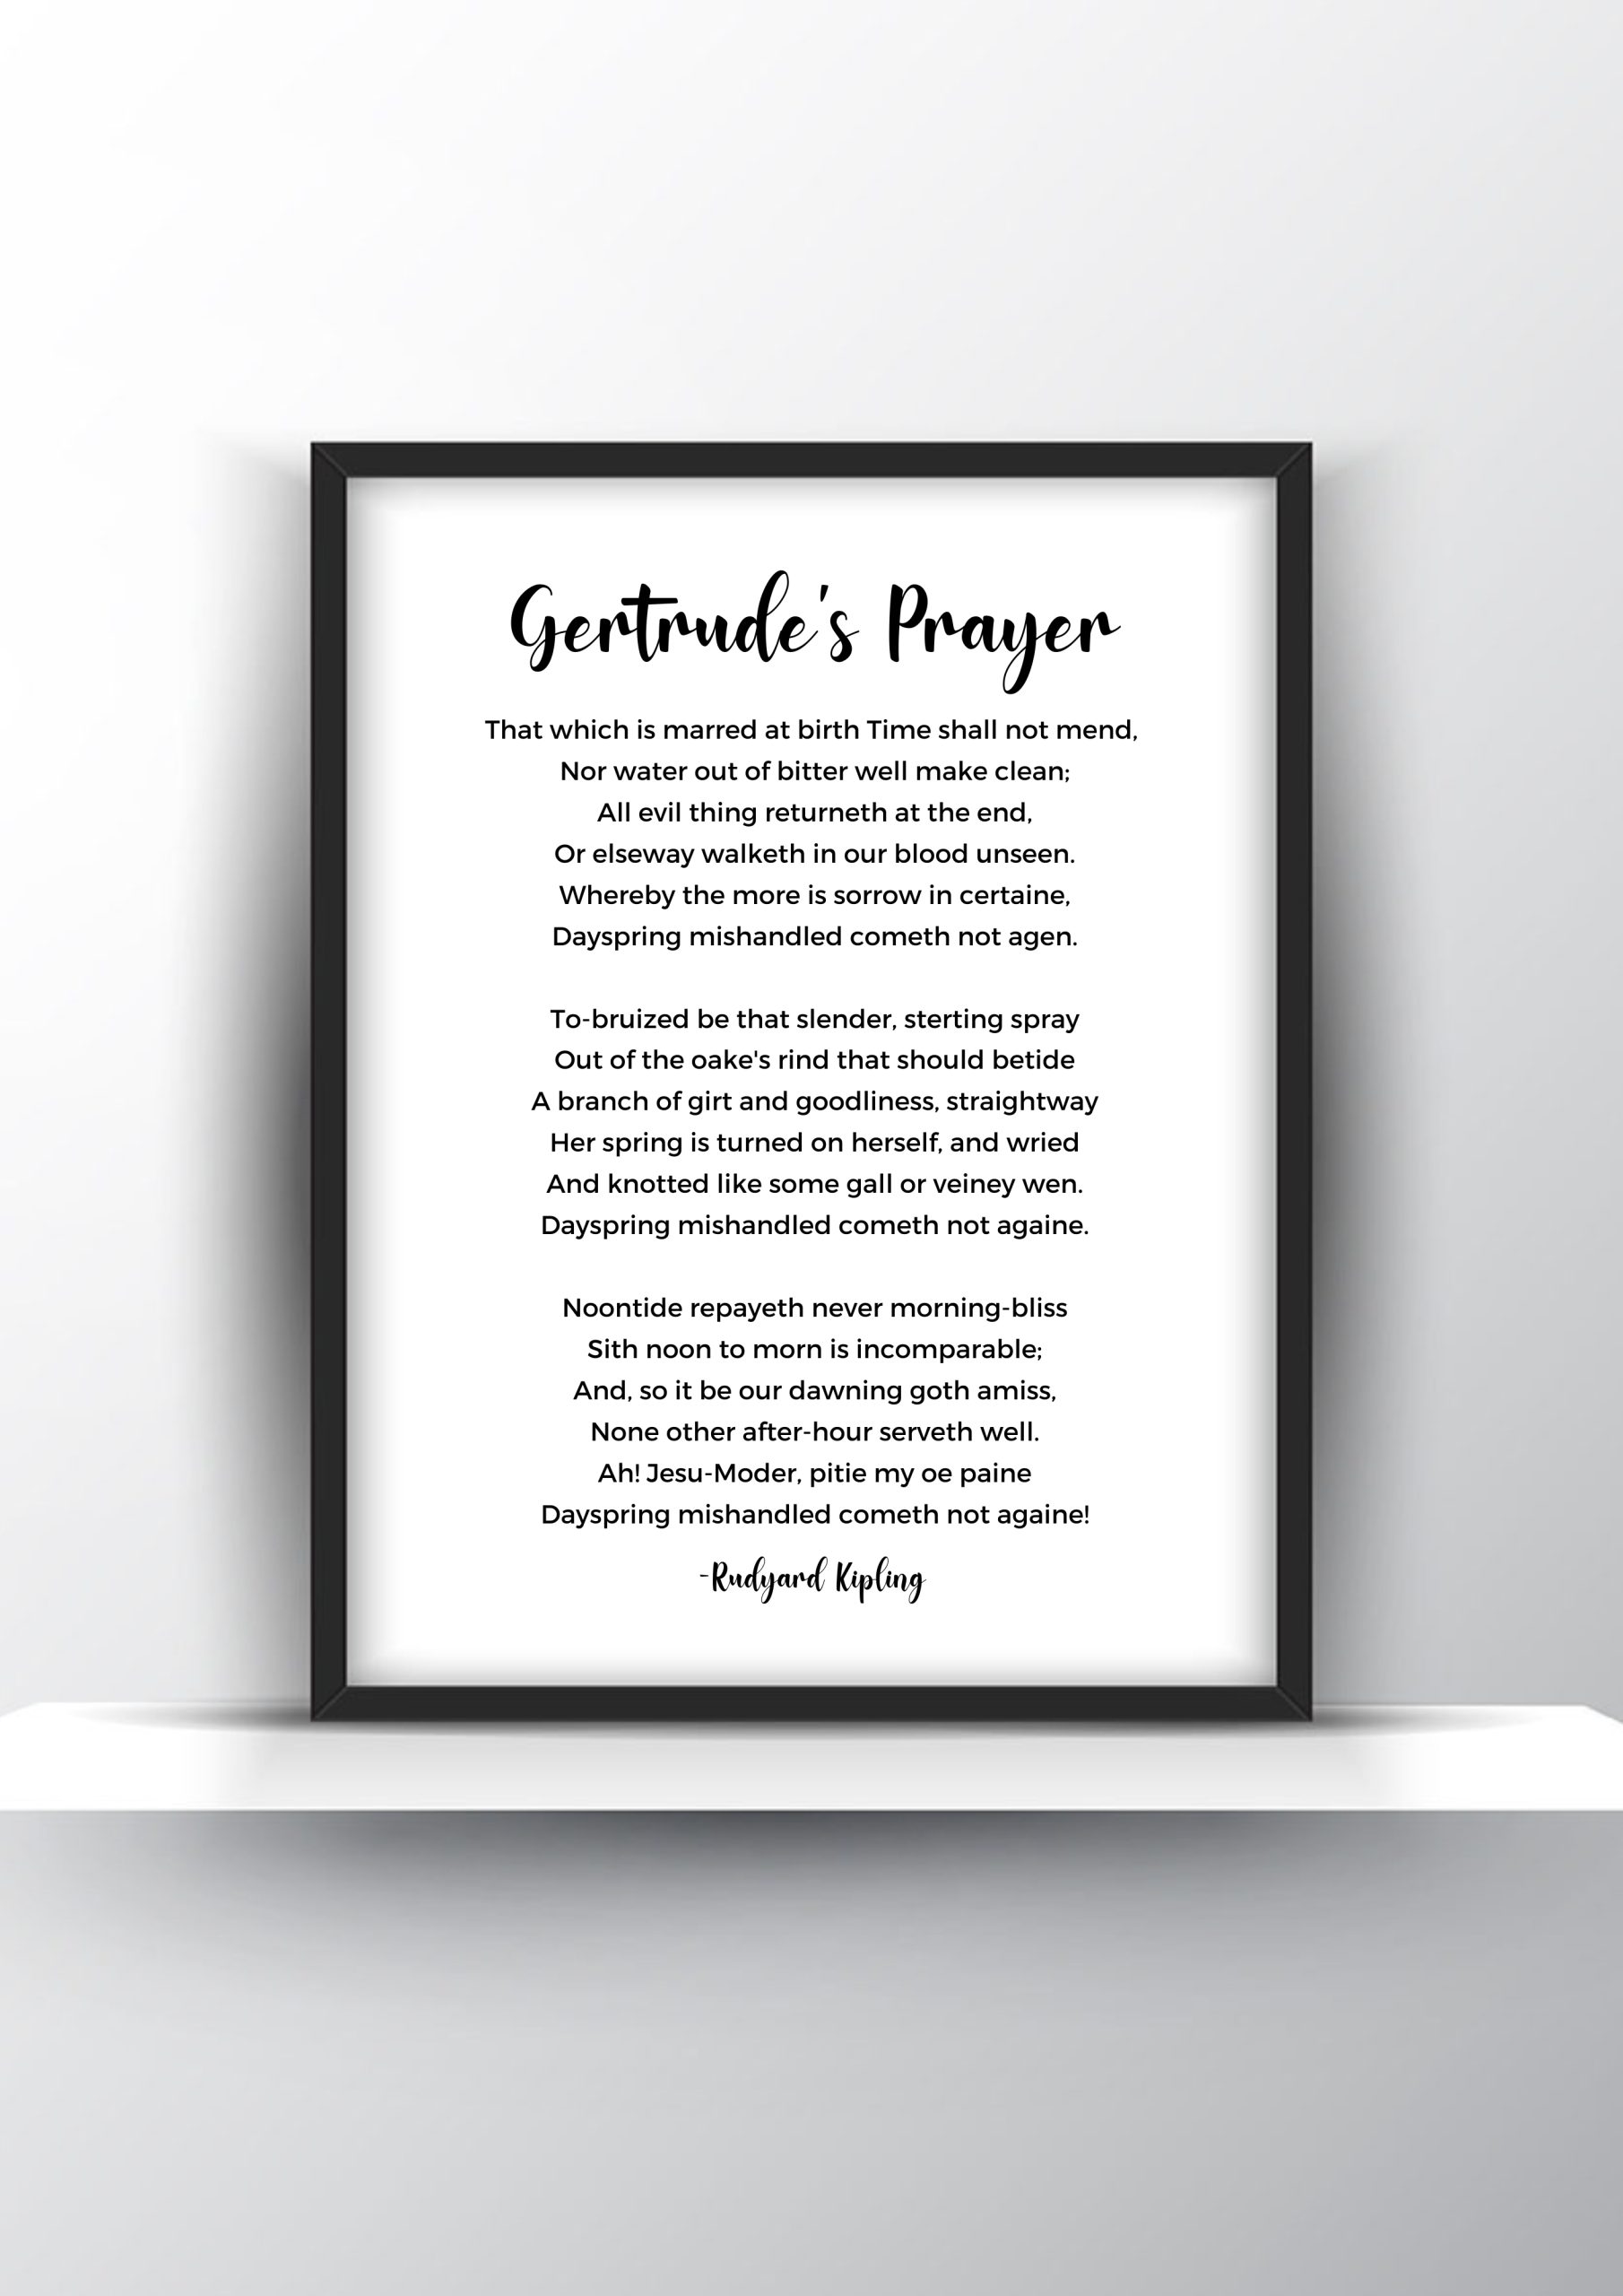 Gertrude's Prayer by Rudyard Kipling